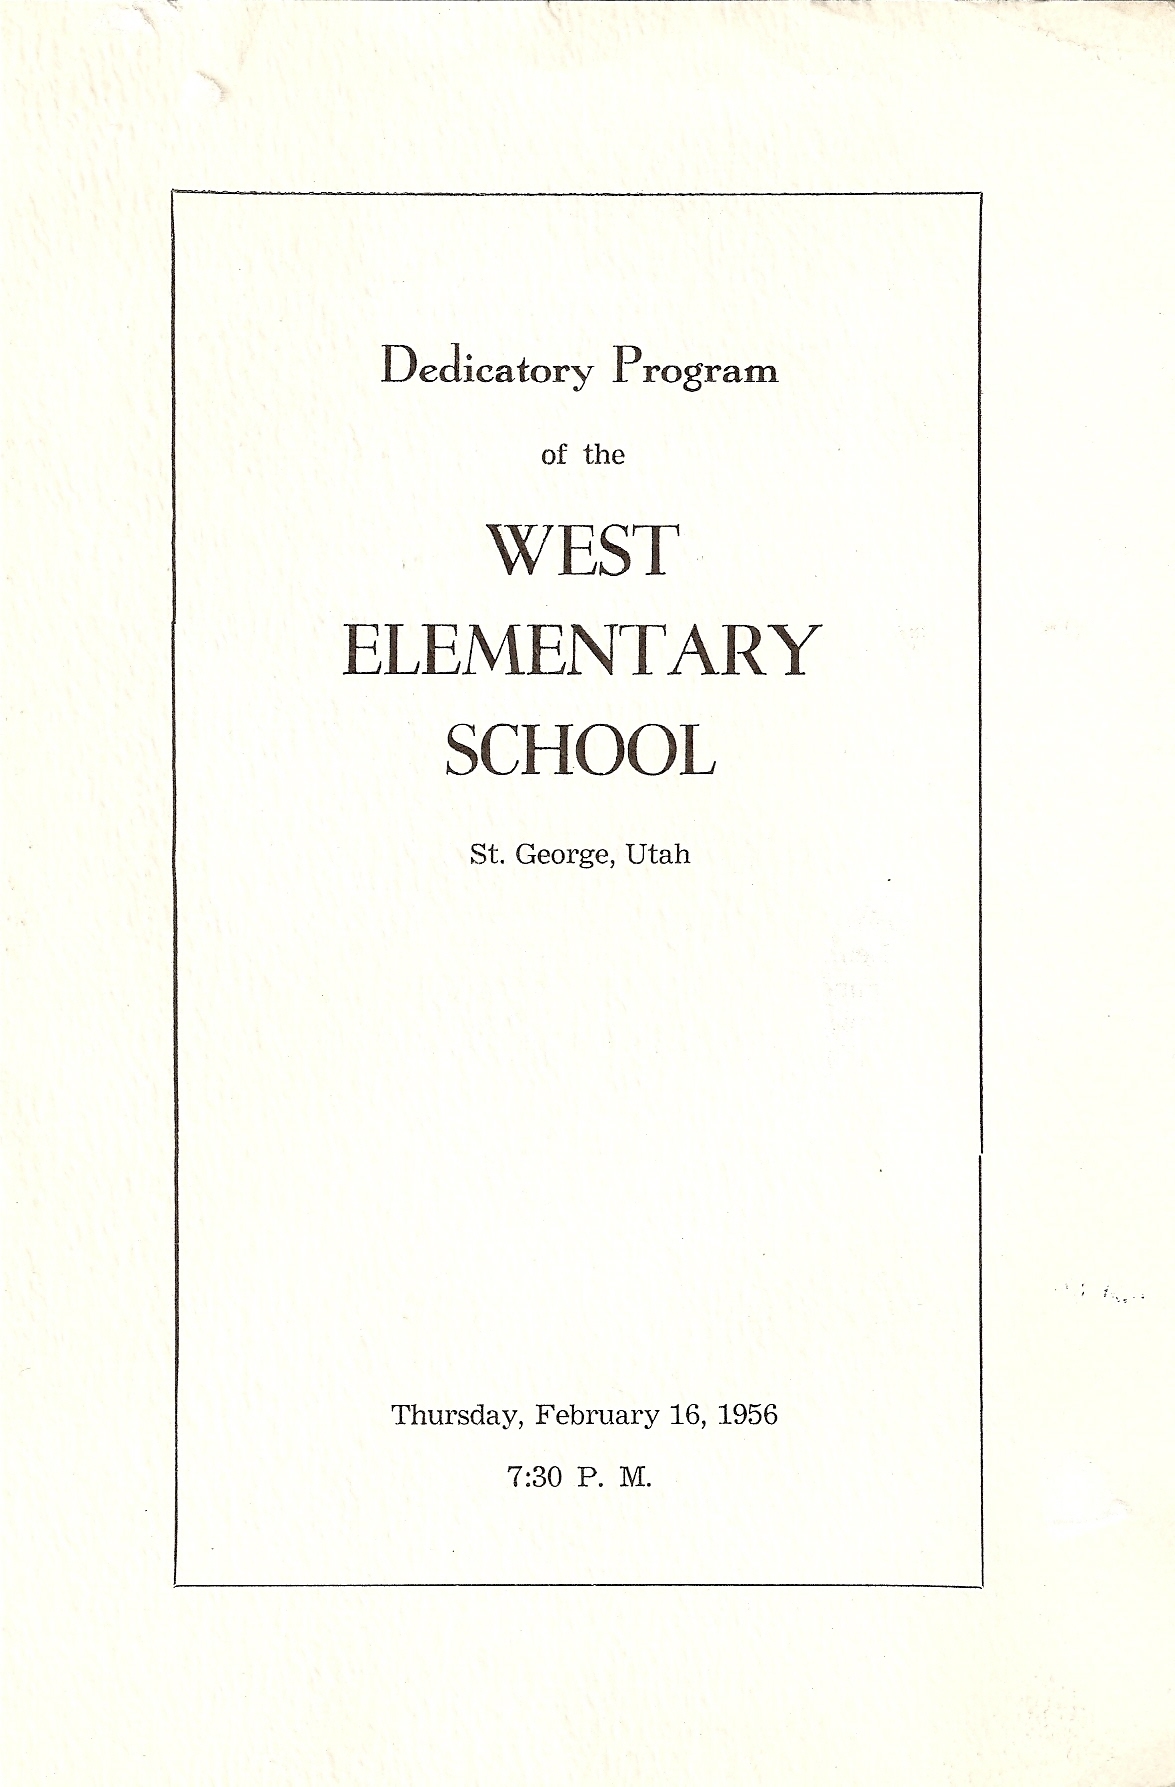 West Elementary School Dedicatory Program Cover